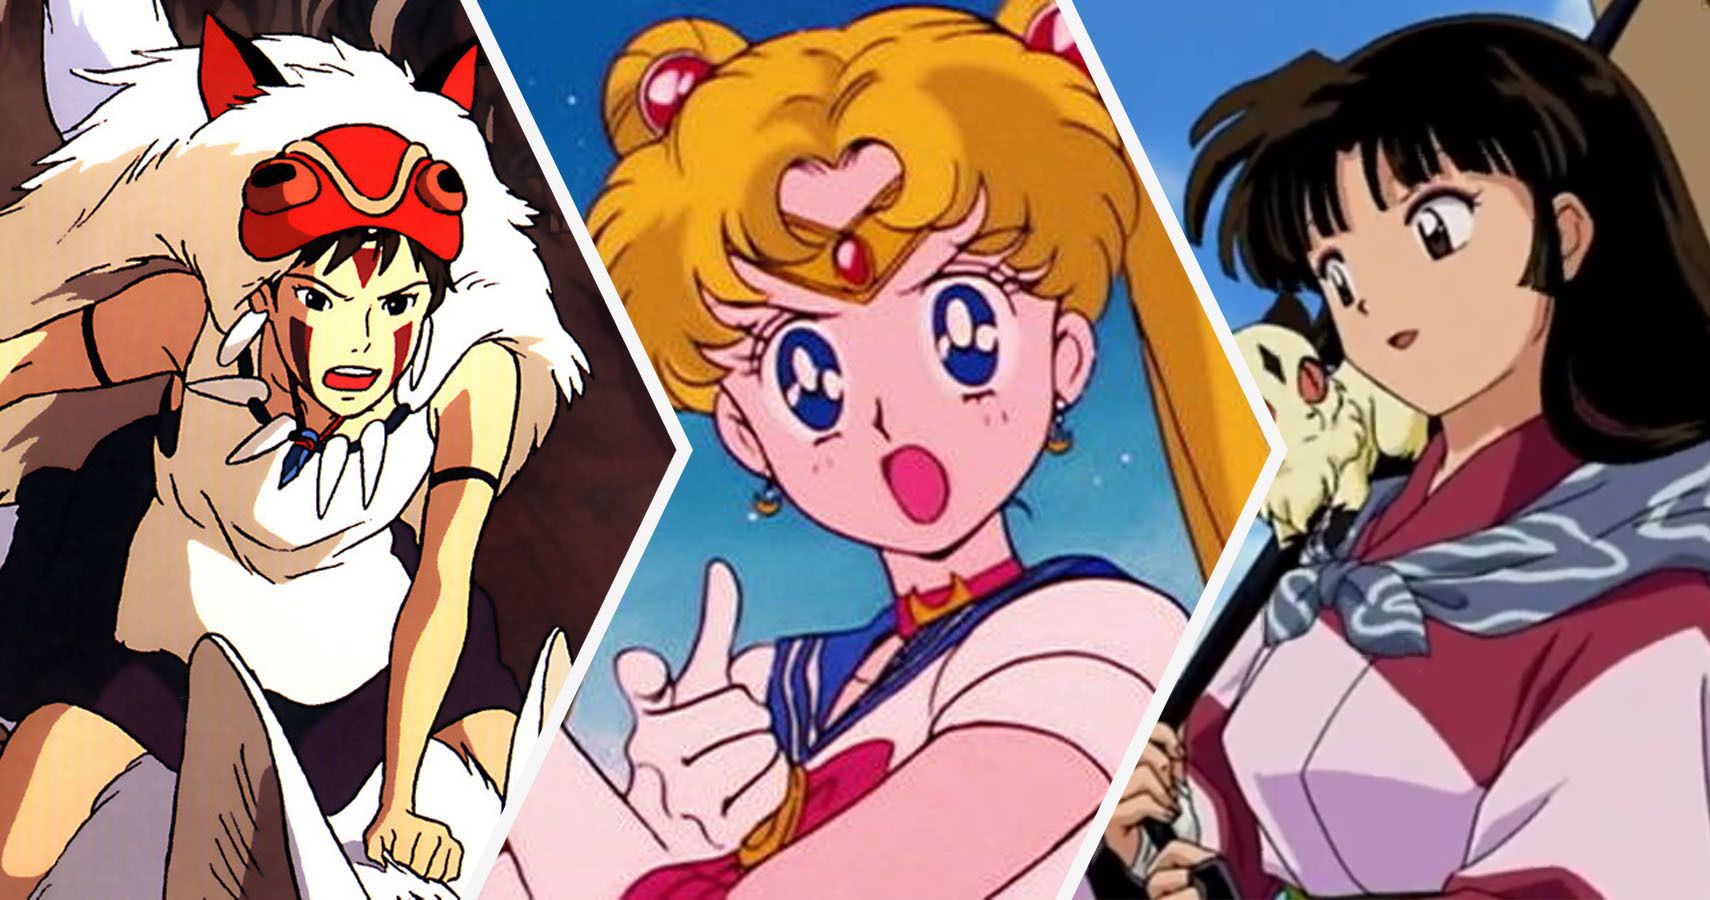 Top 25 Badass Anime Warrior Girls 